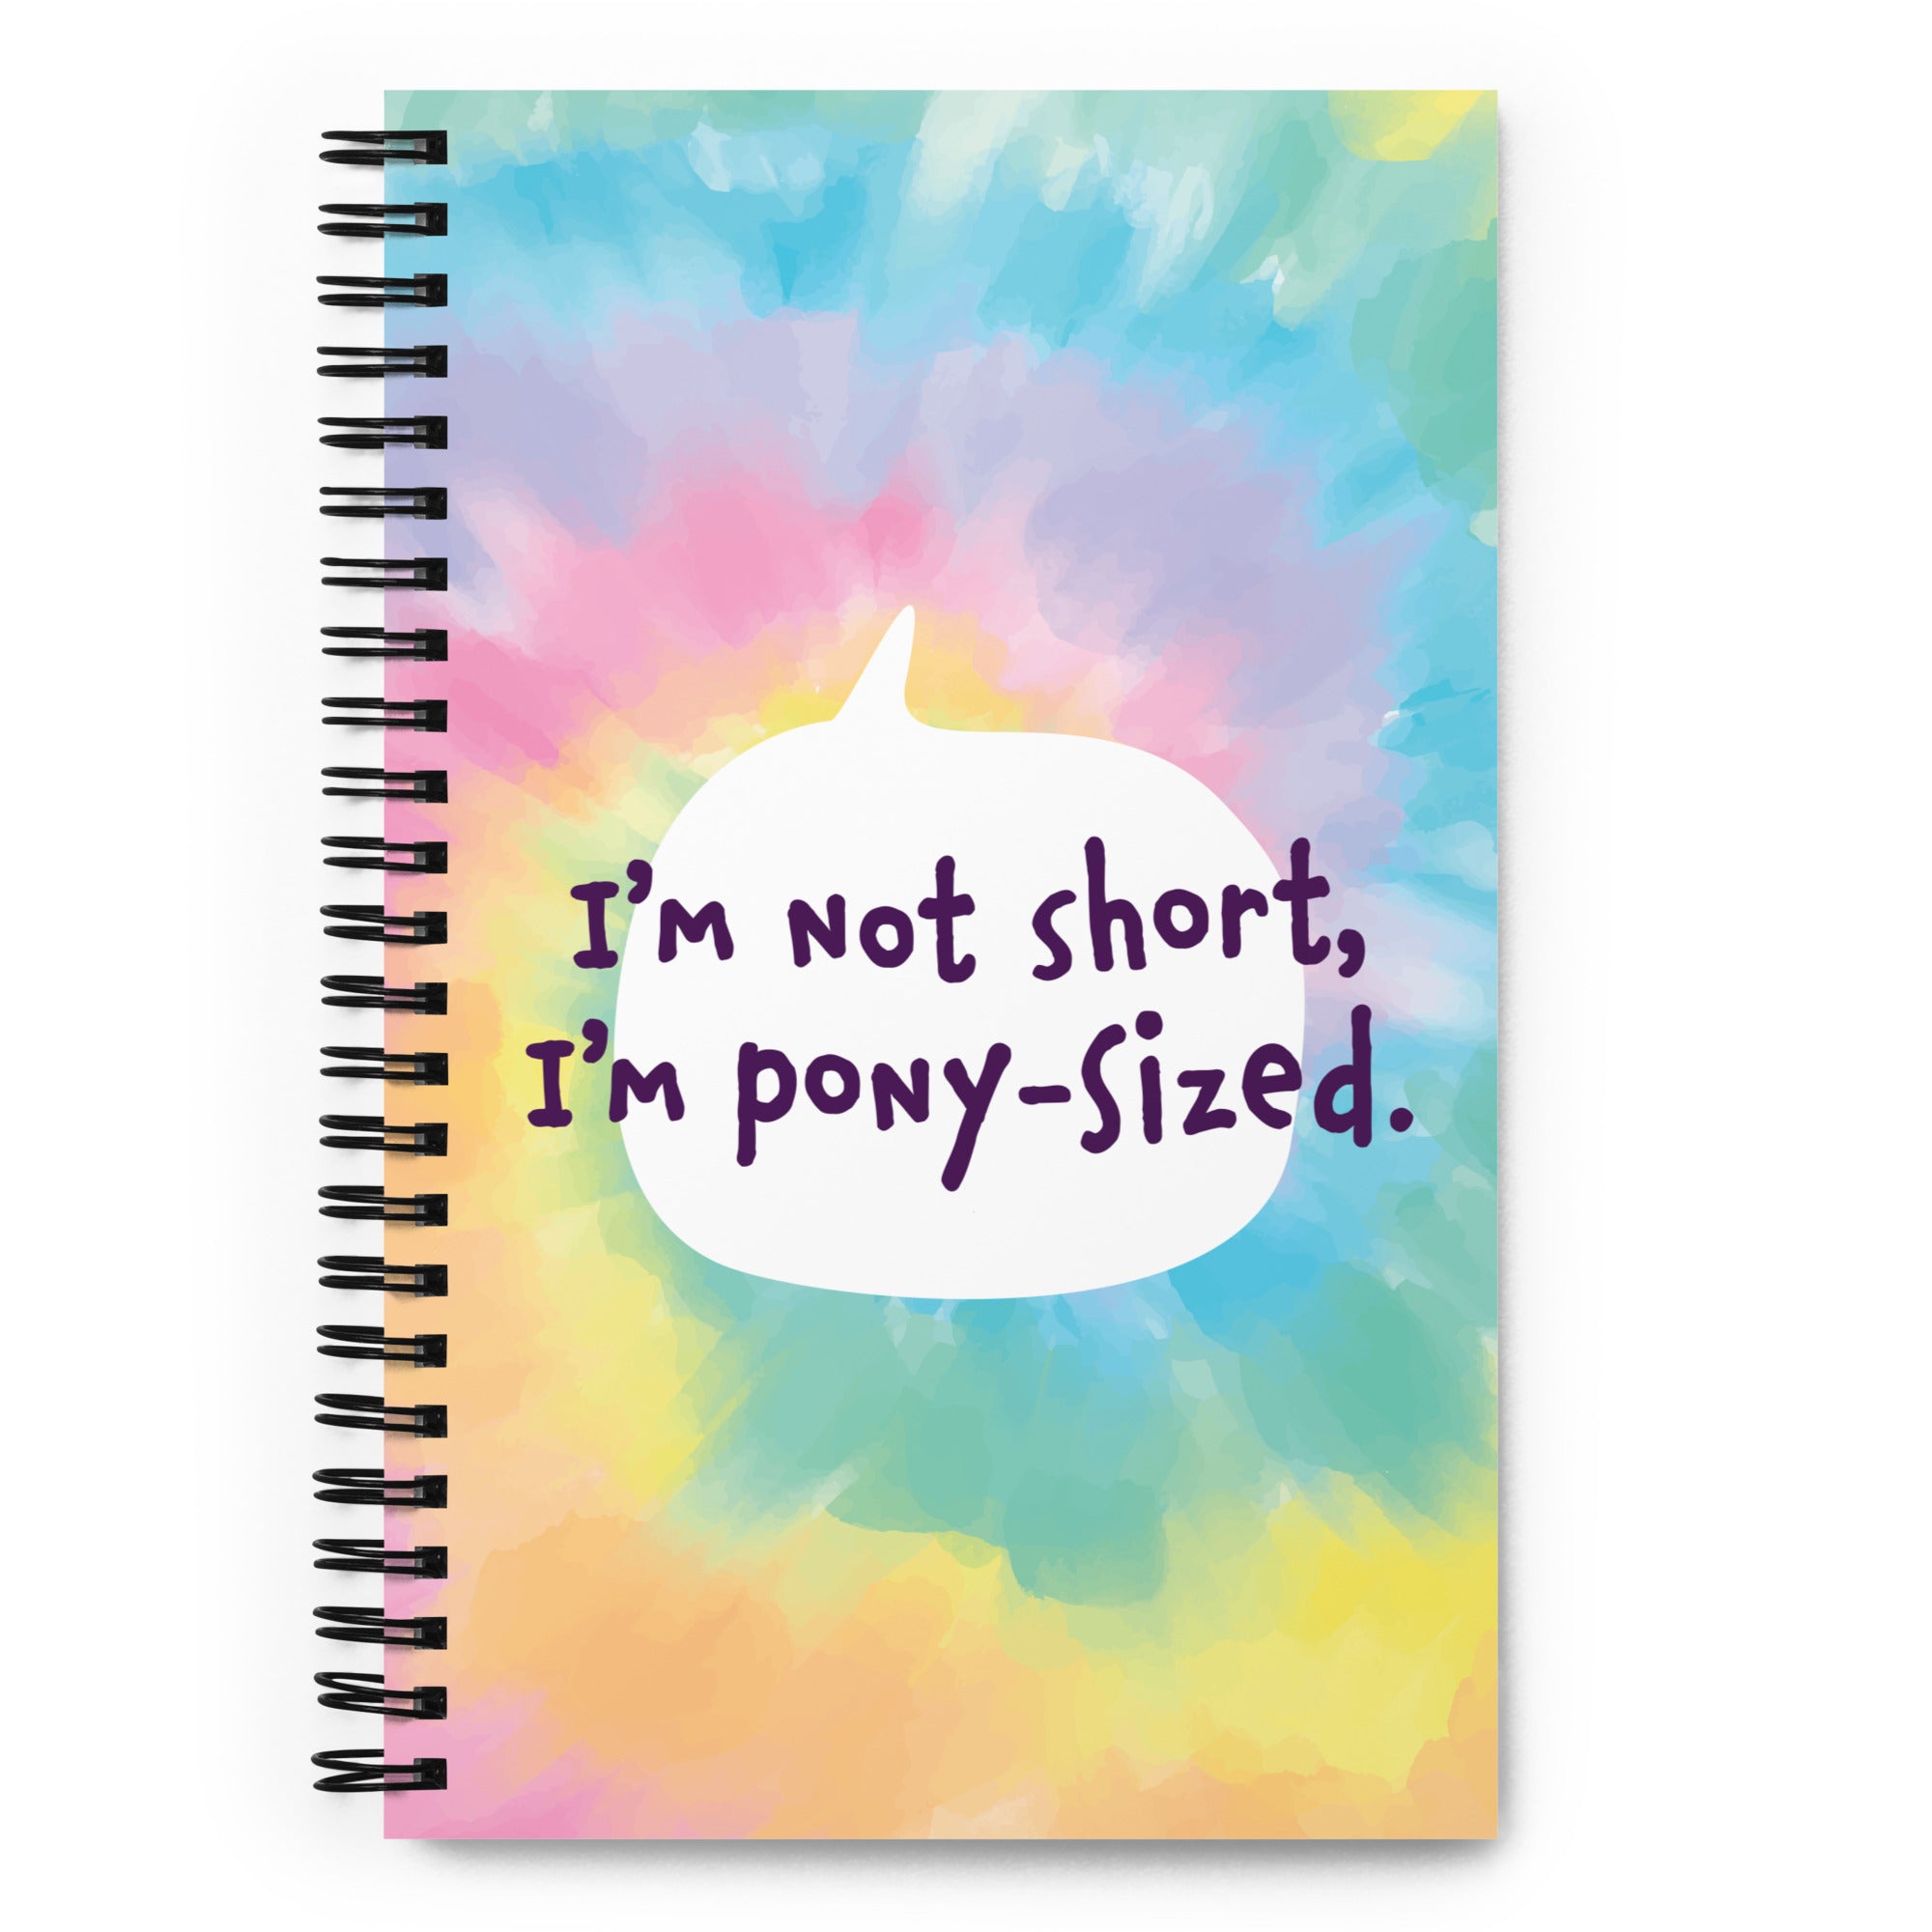 I'm Pony-Sized Spiral notebook